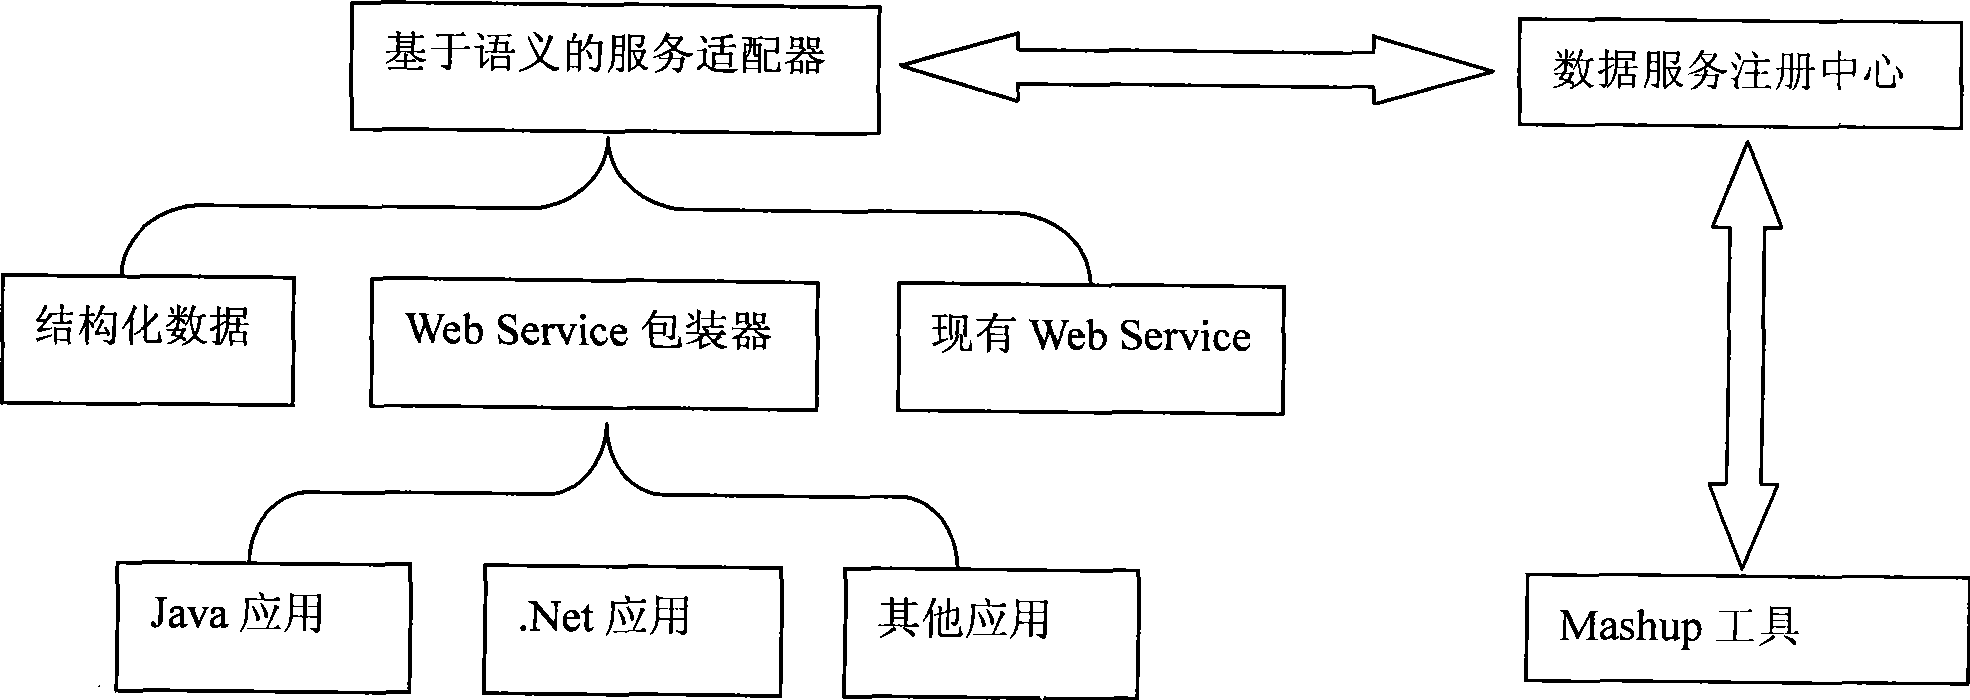 Data service mixing method based on semantic